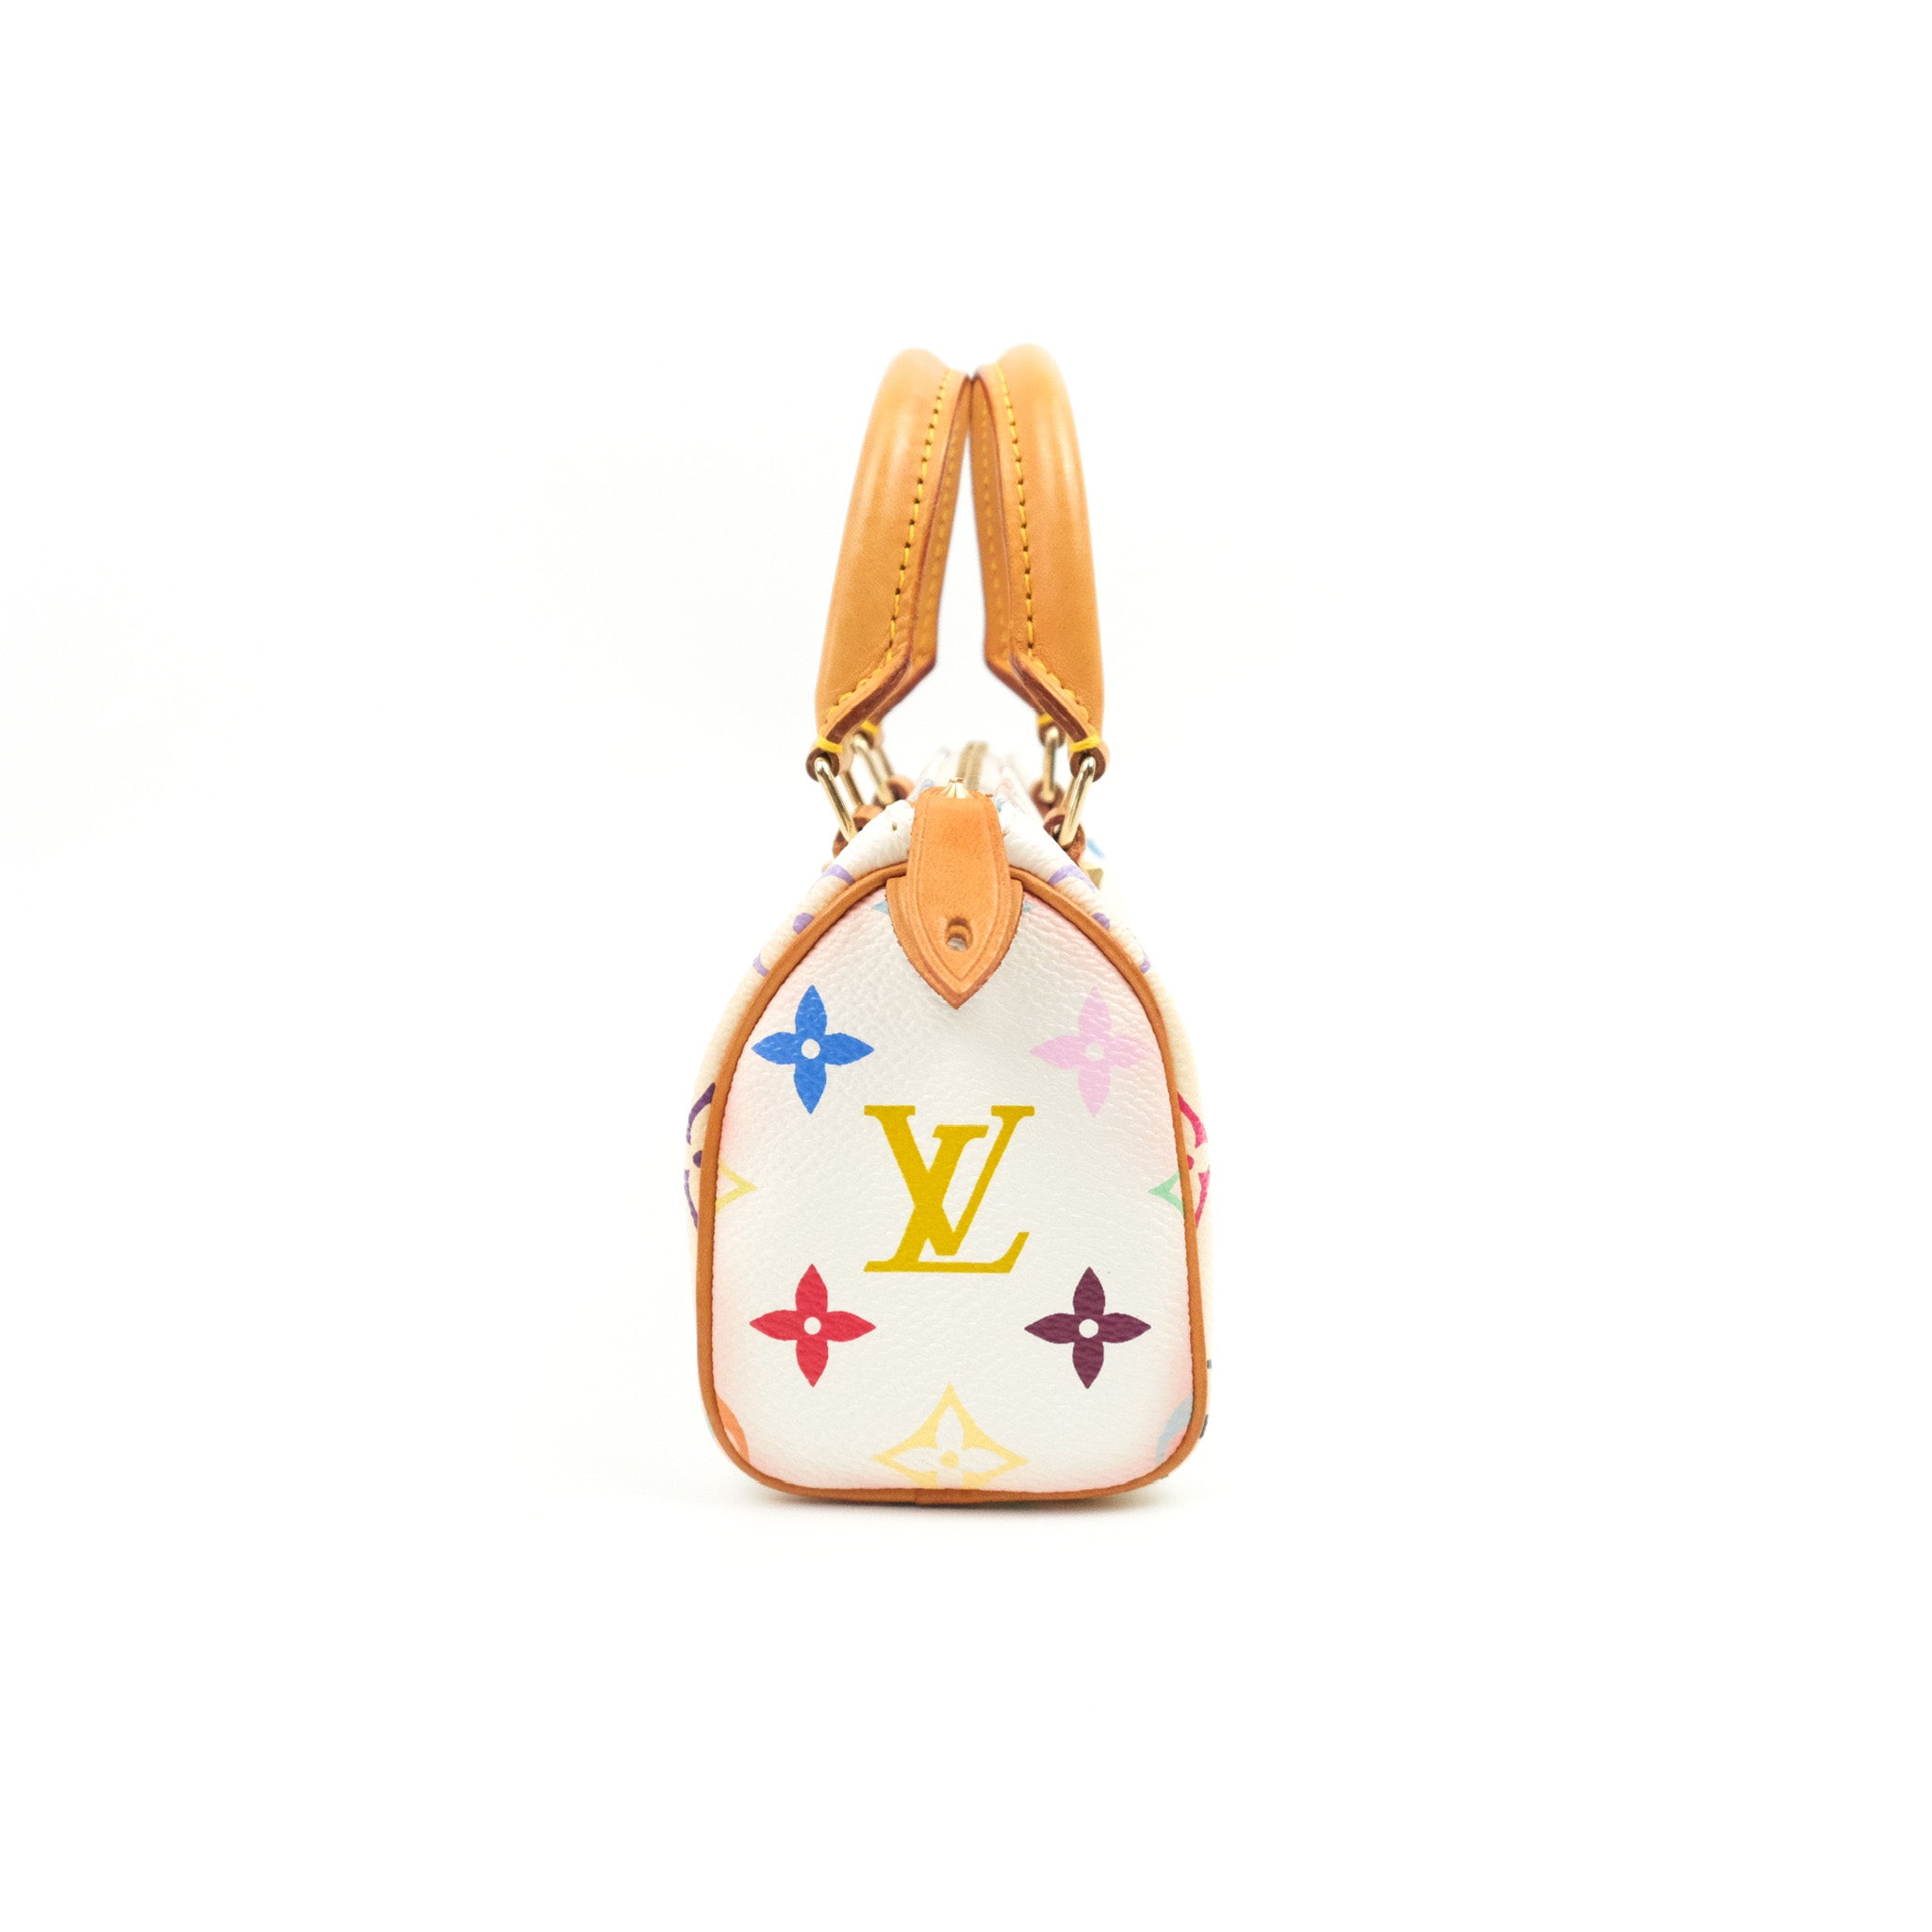 Sold at Auction: Louis Vuitton Monogram Multicolor Mini Speedy